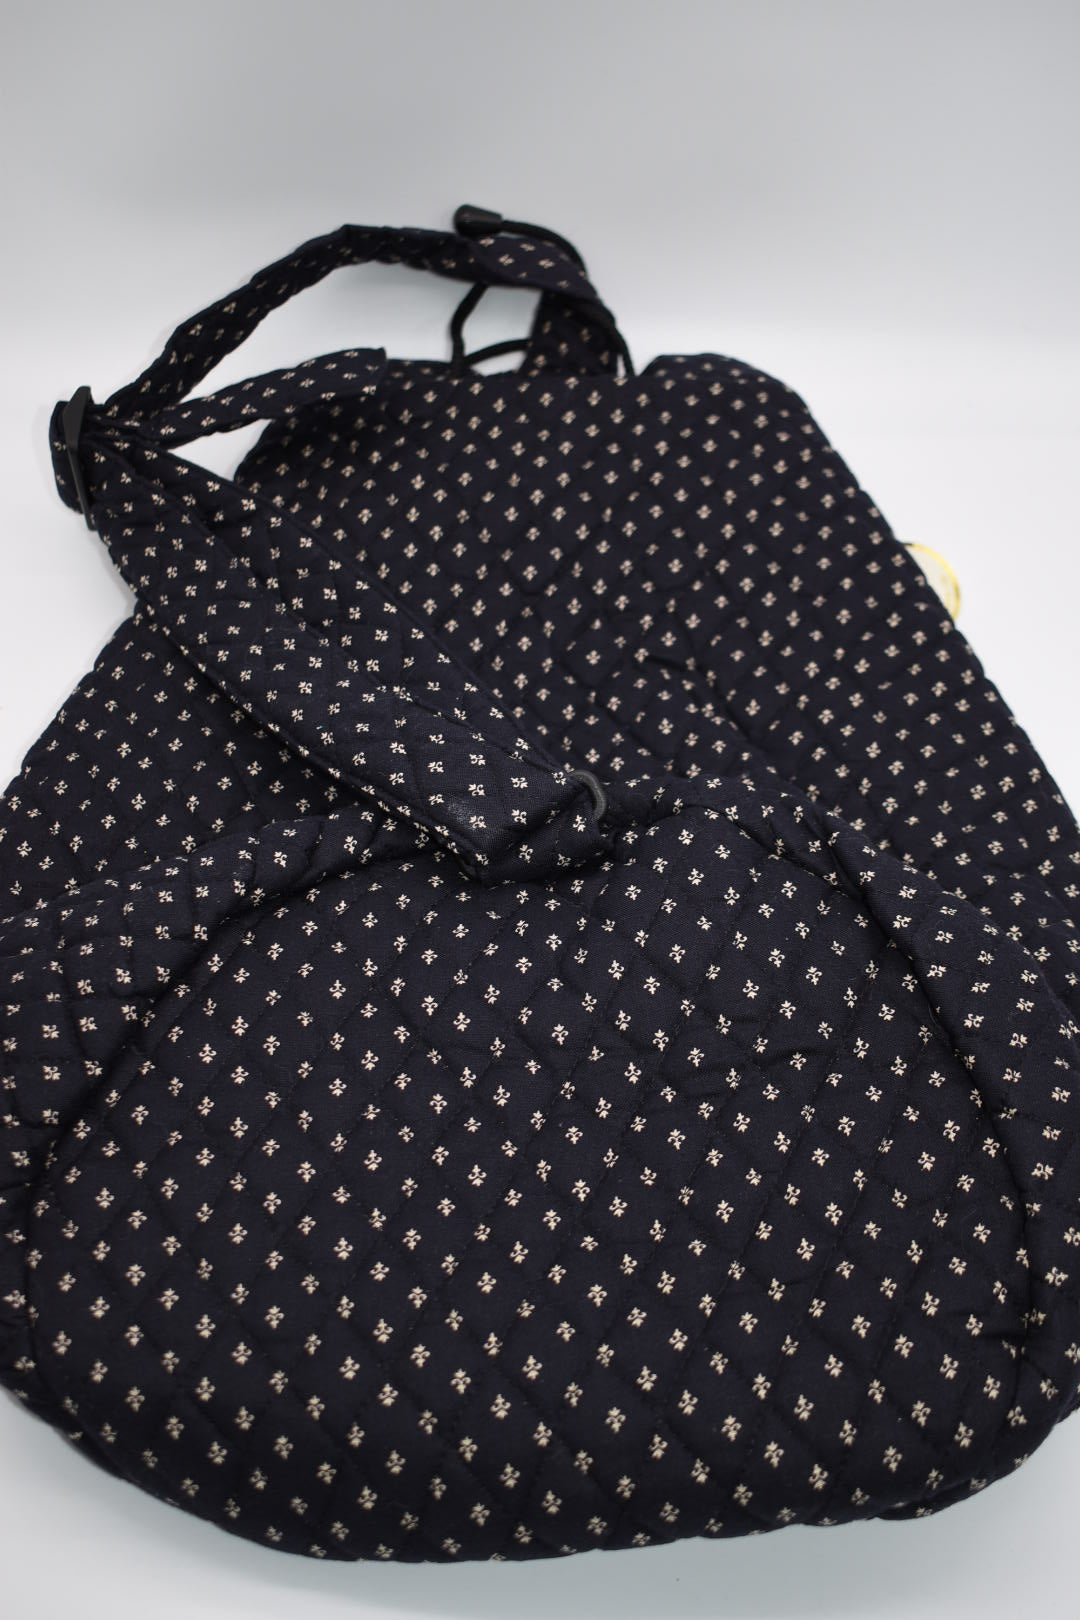 Vintage Vera Bradley Large Sling Bag in "Black - 1990" Pattern